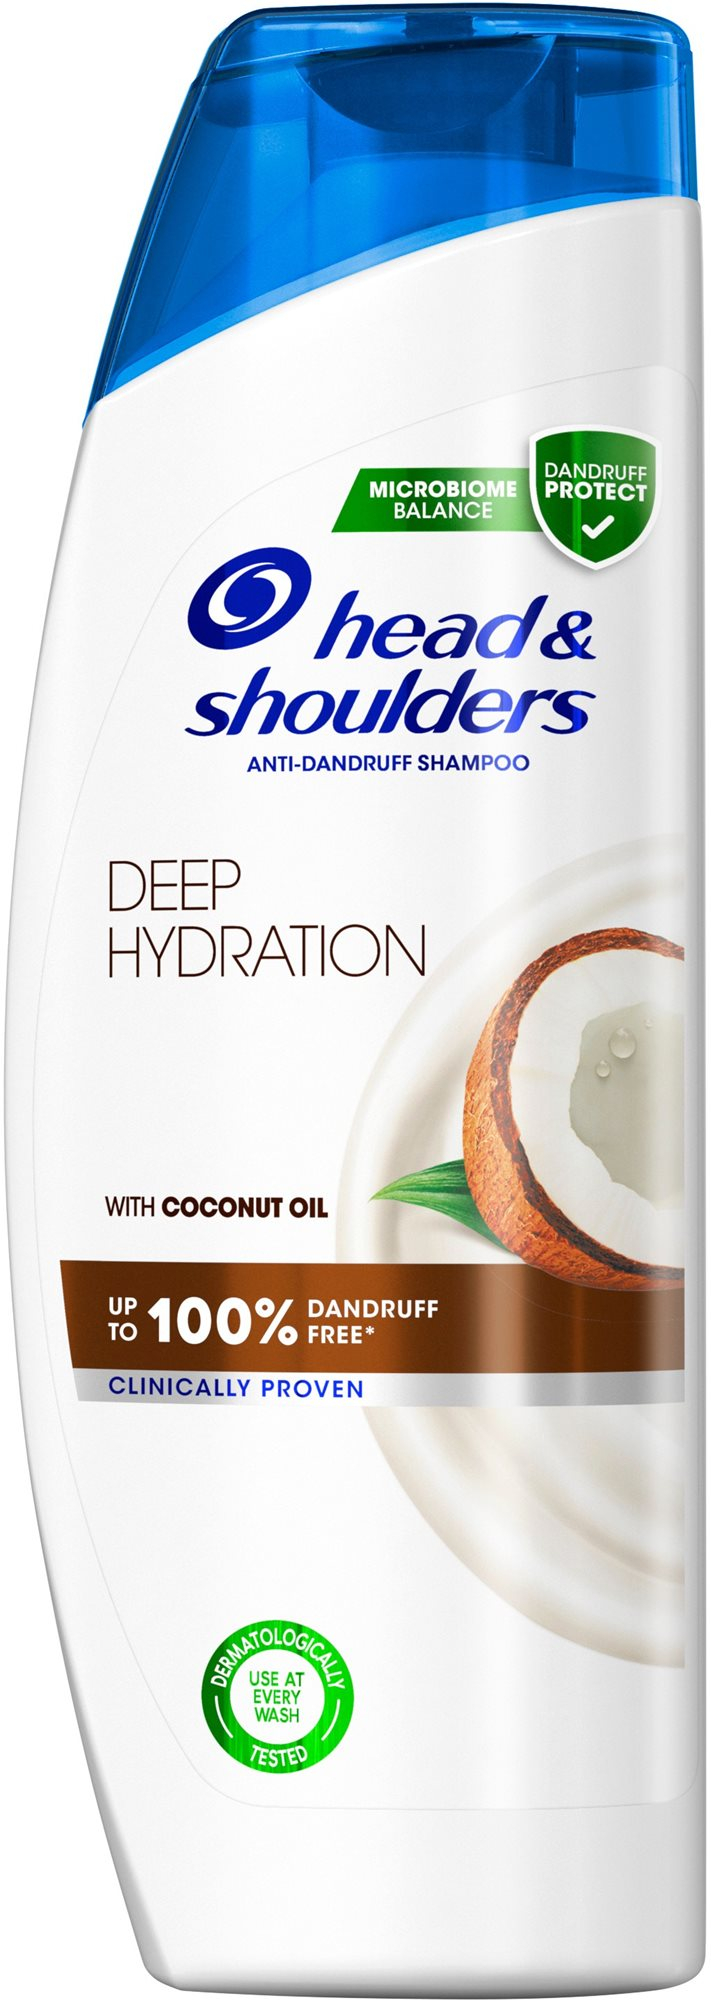 Sampon HEAD&SHOULDERS Hydration 540 ml